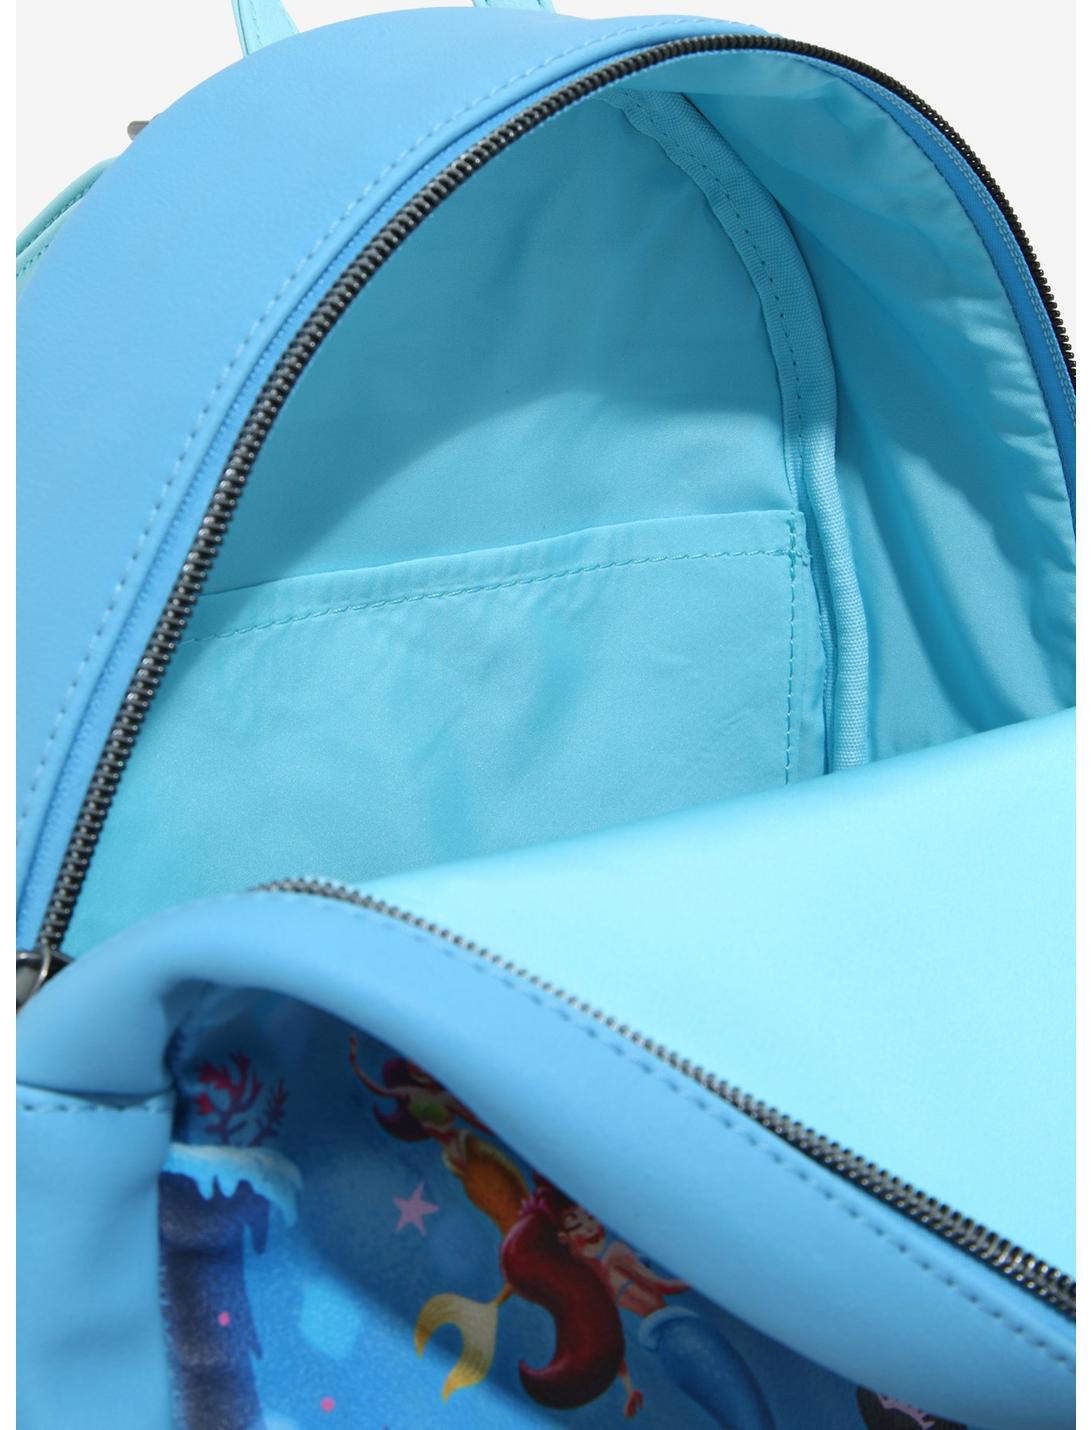 Loungefly Disney The Little Mermaid Ariel & Sisters Mini Backpack